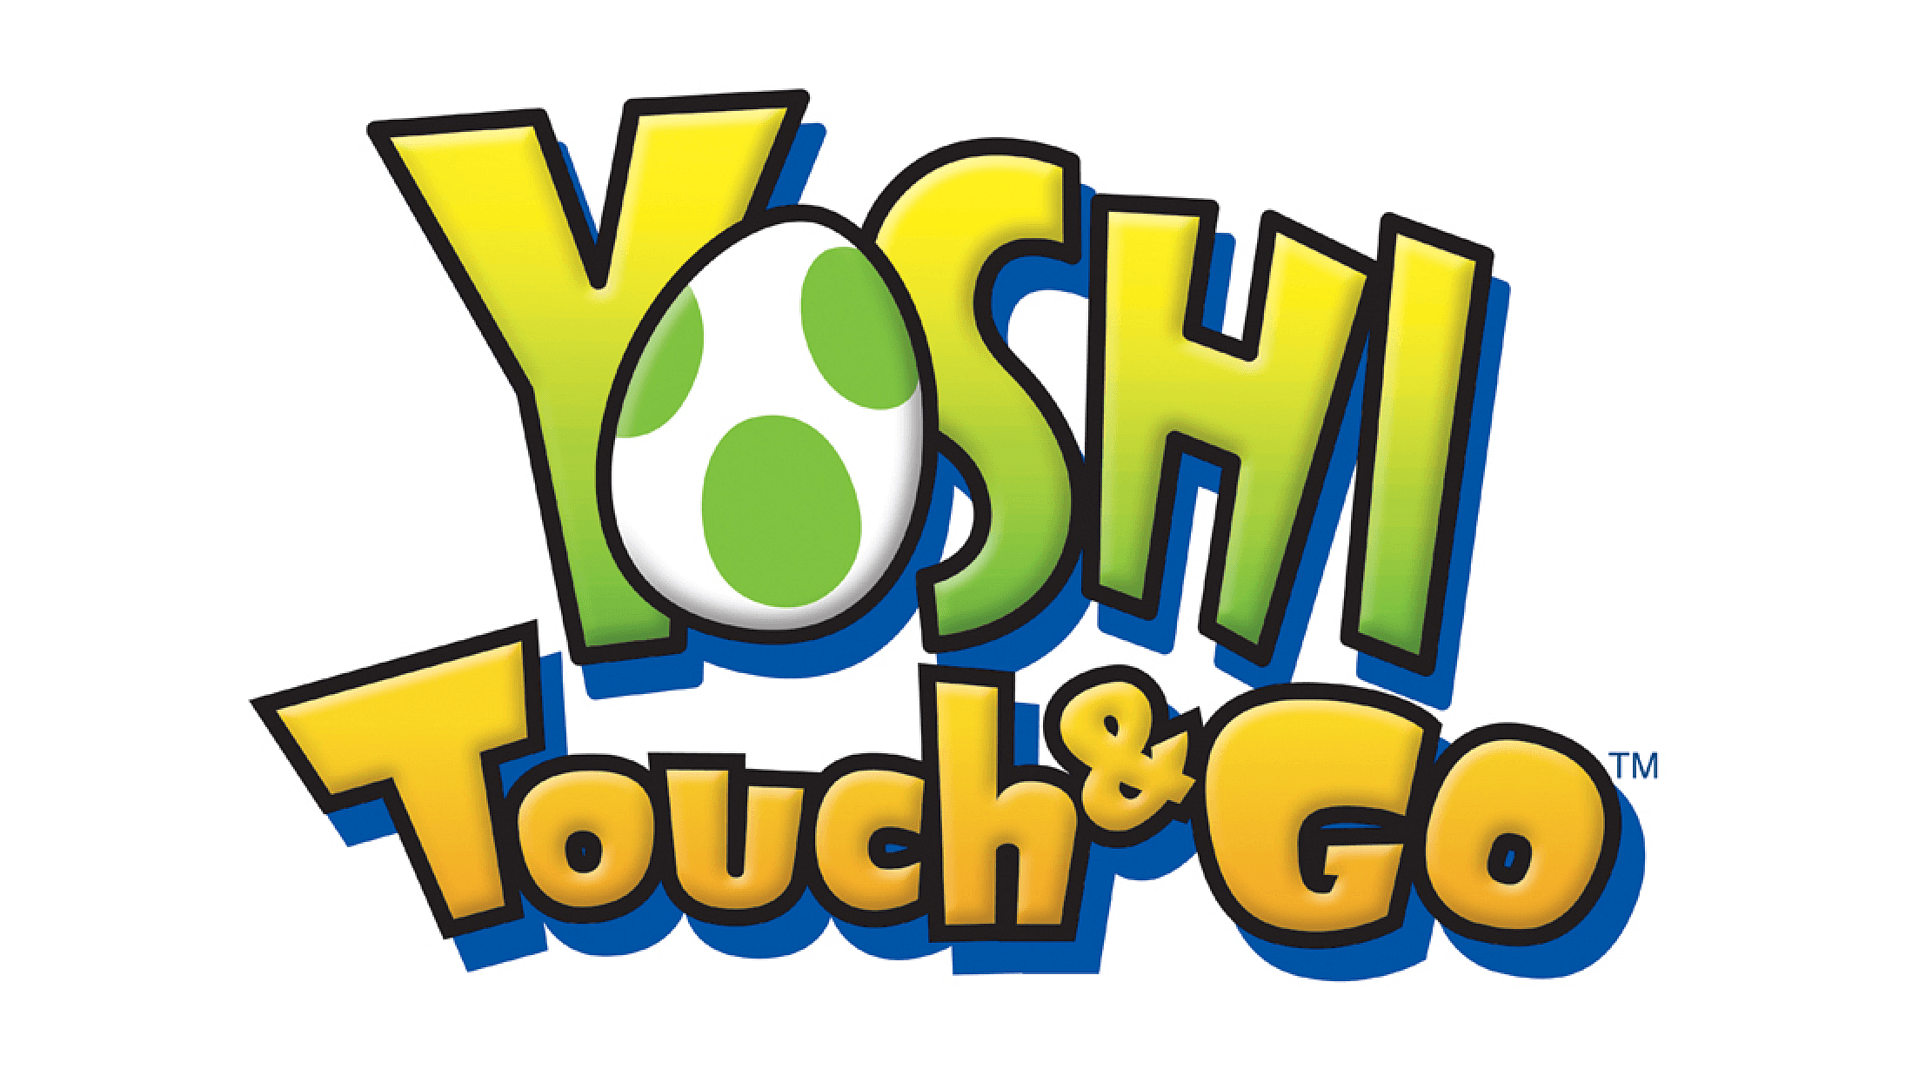 Yoshi Logo - Yoshi Touch & Go | Logopedia | FANDOM powered by Wikia